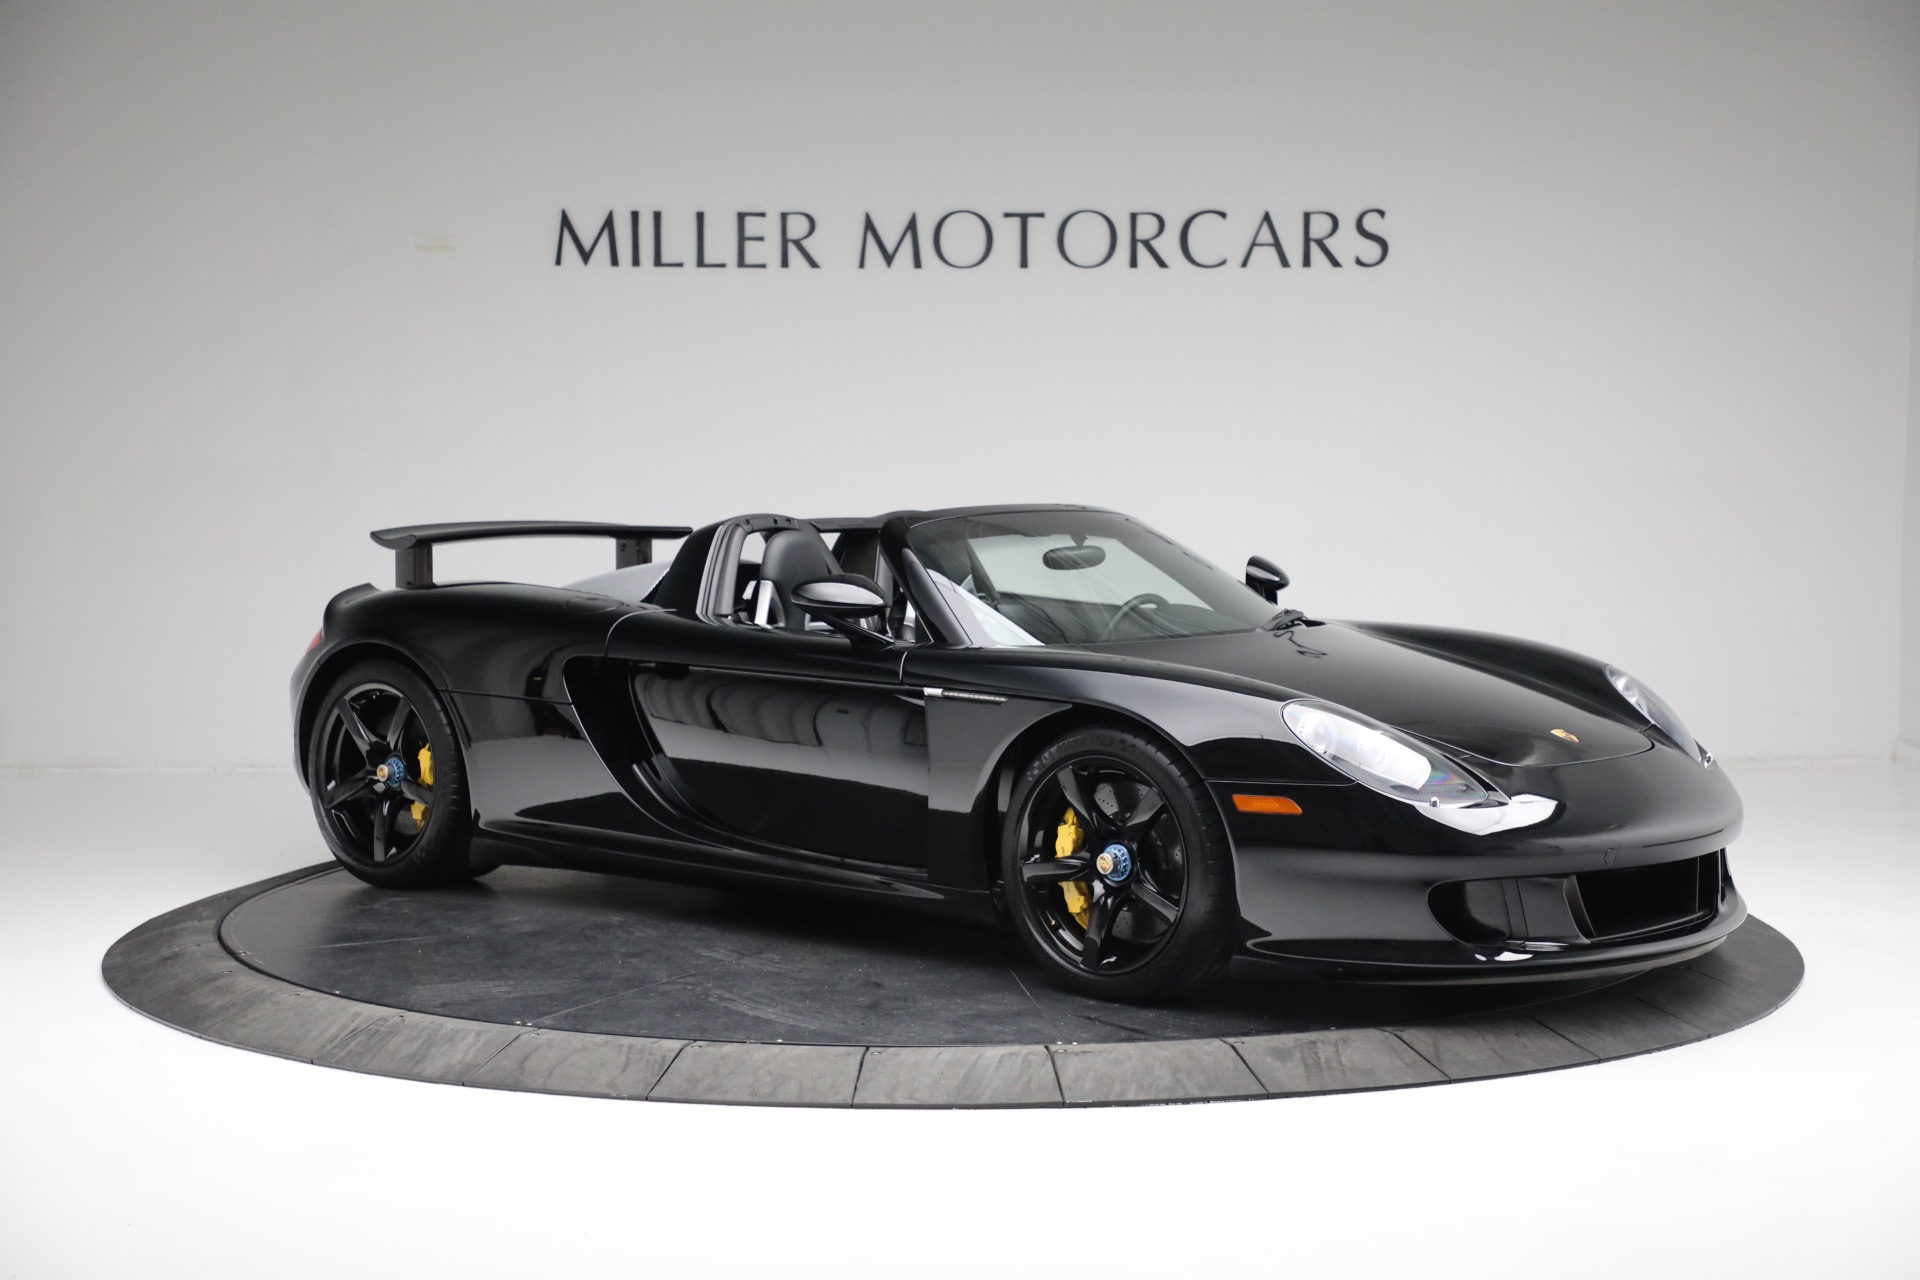 Pre-Owned 2005 Porsche Carrera GT For Sale ($1,400,000) | Miller Motorcars  Stock #8431C